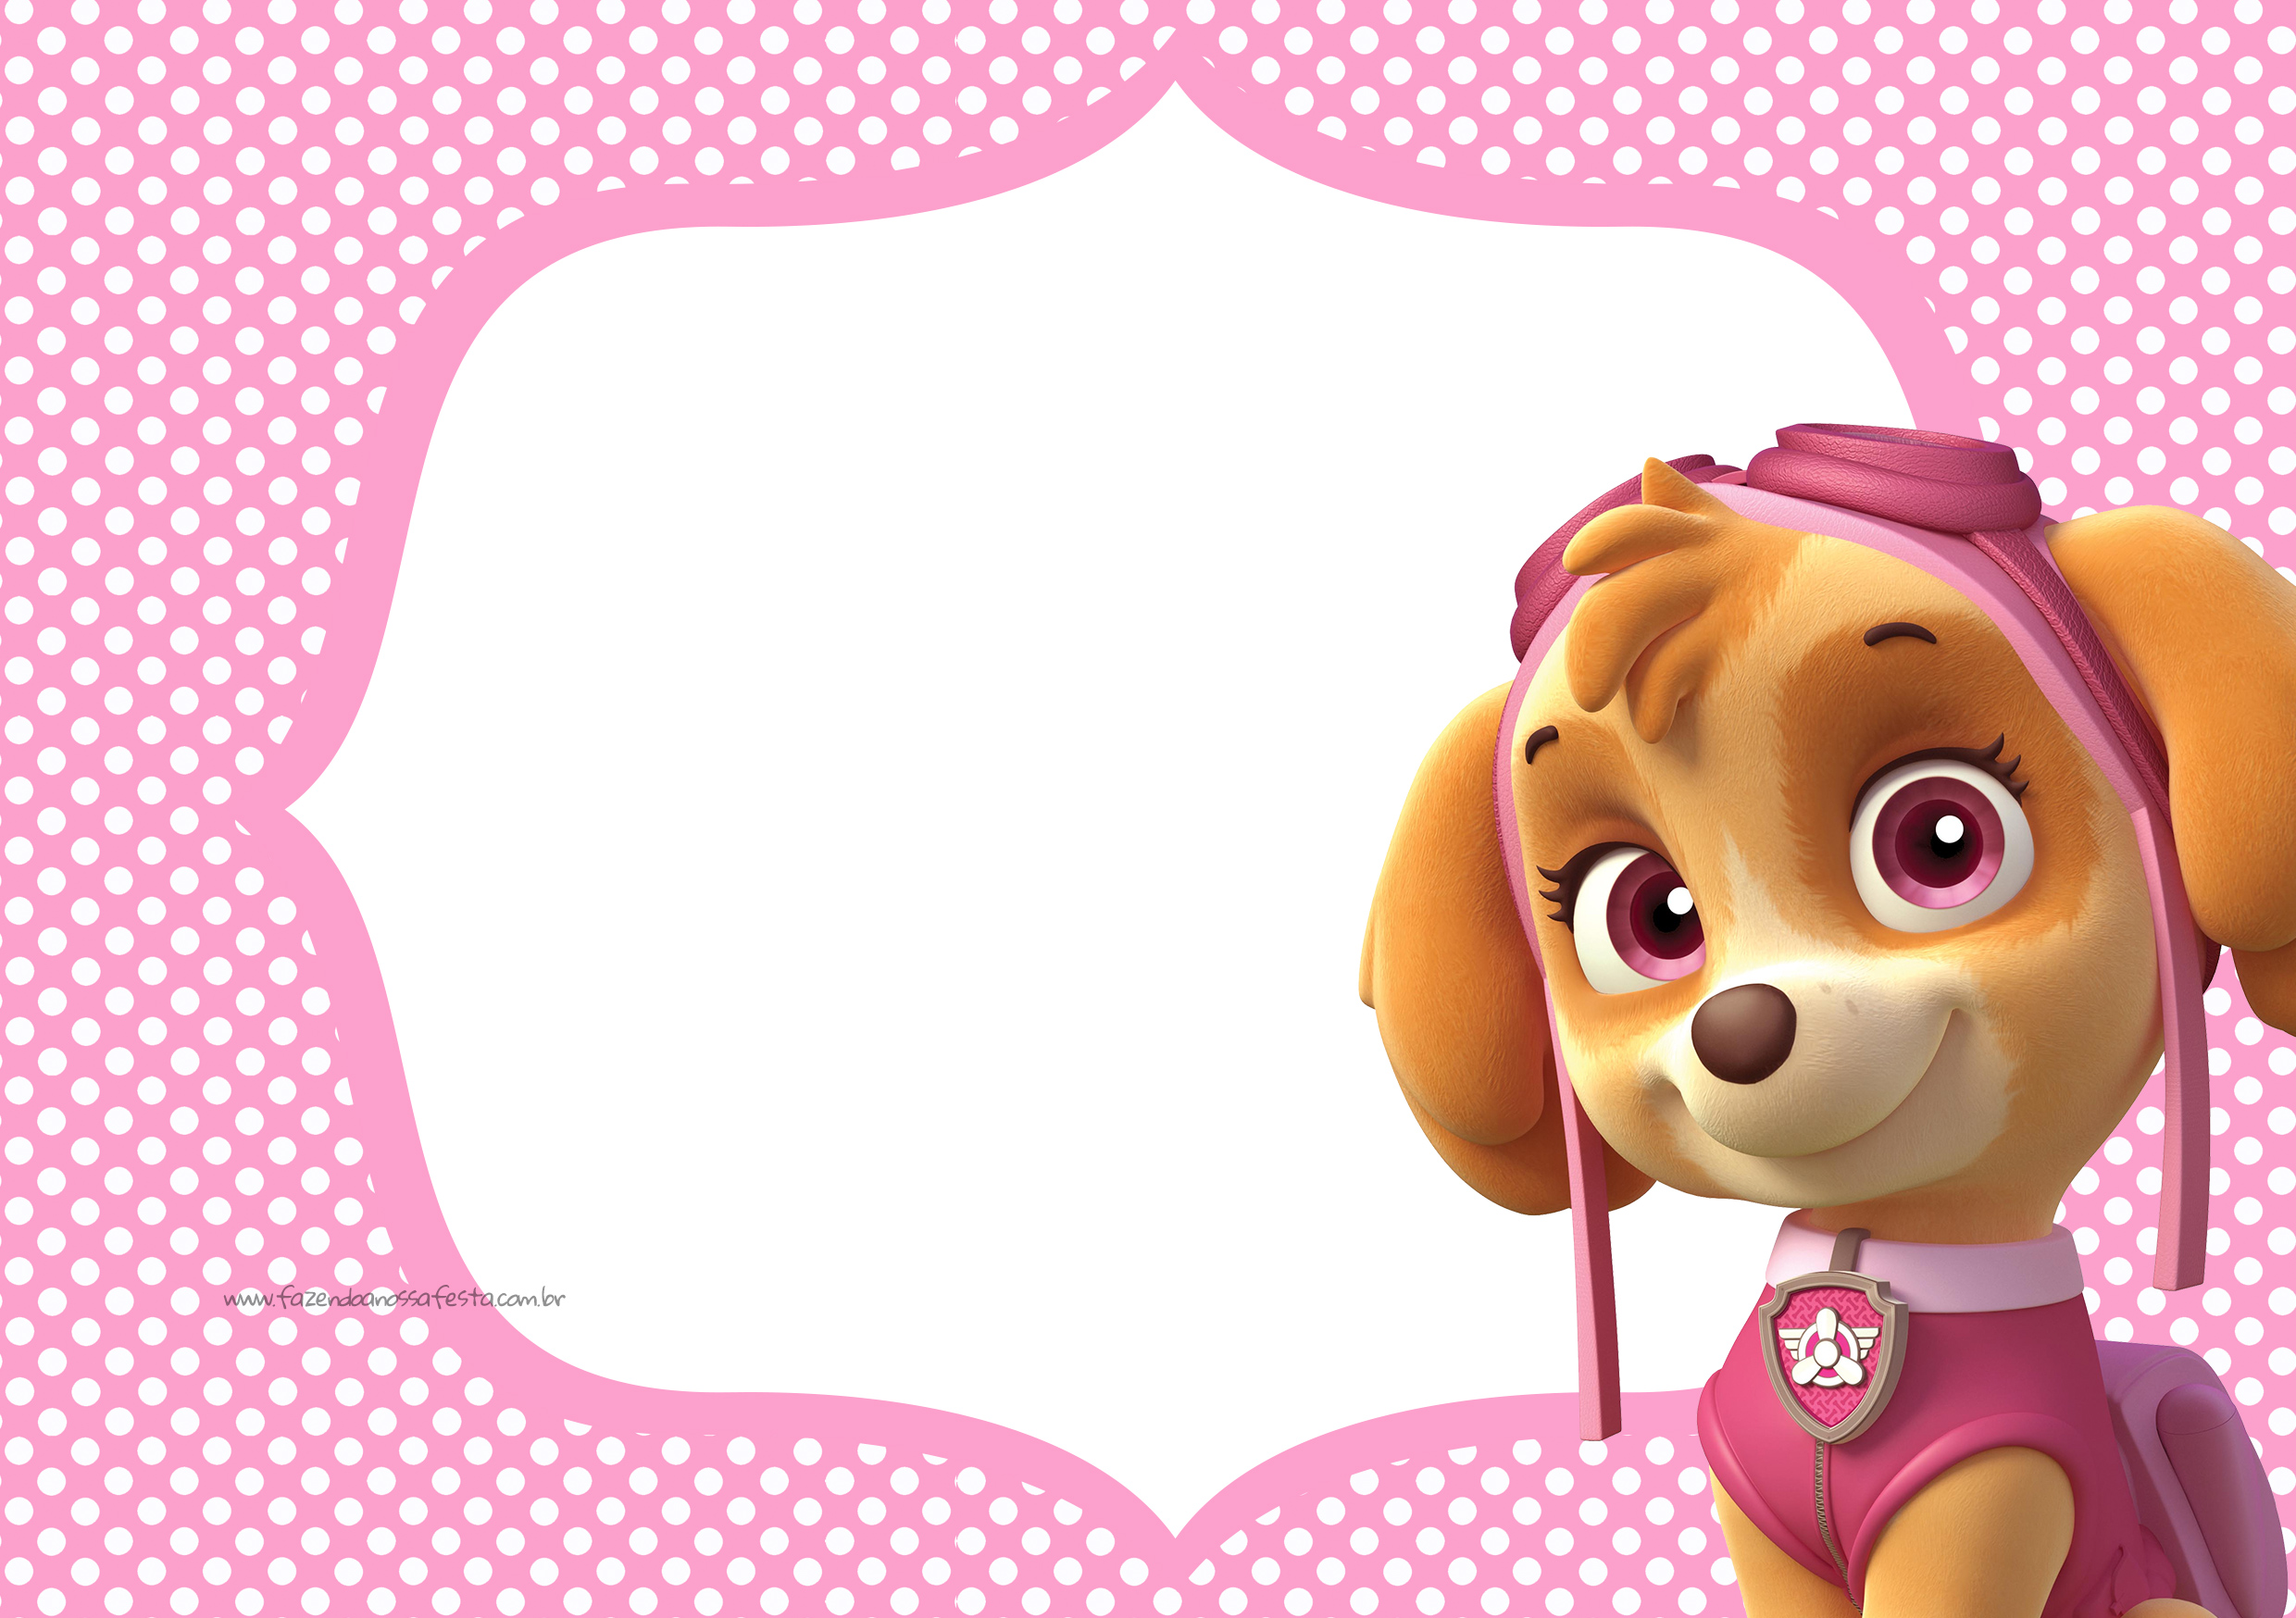 Convite Digital | Virtual Patrulha Canina Rosa 01